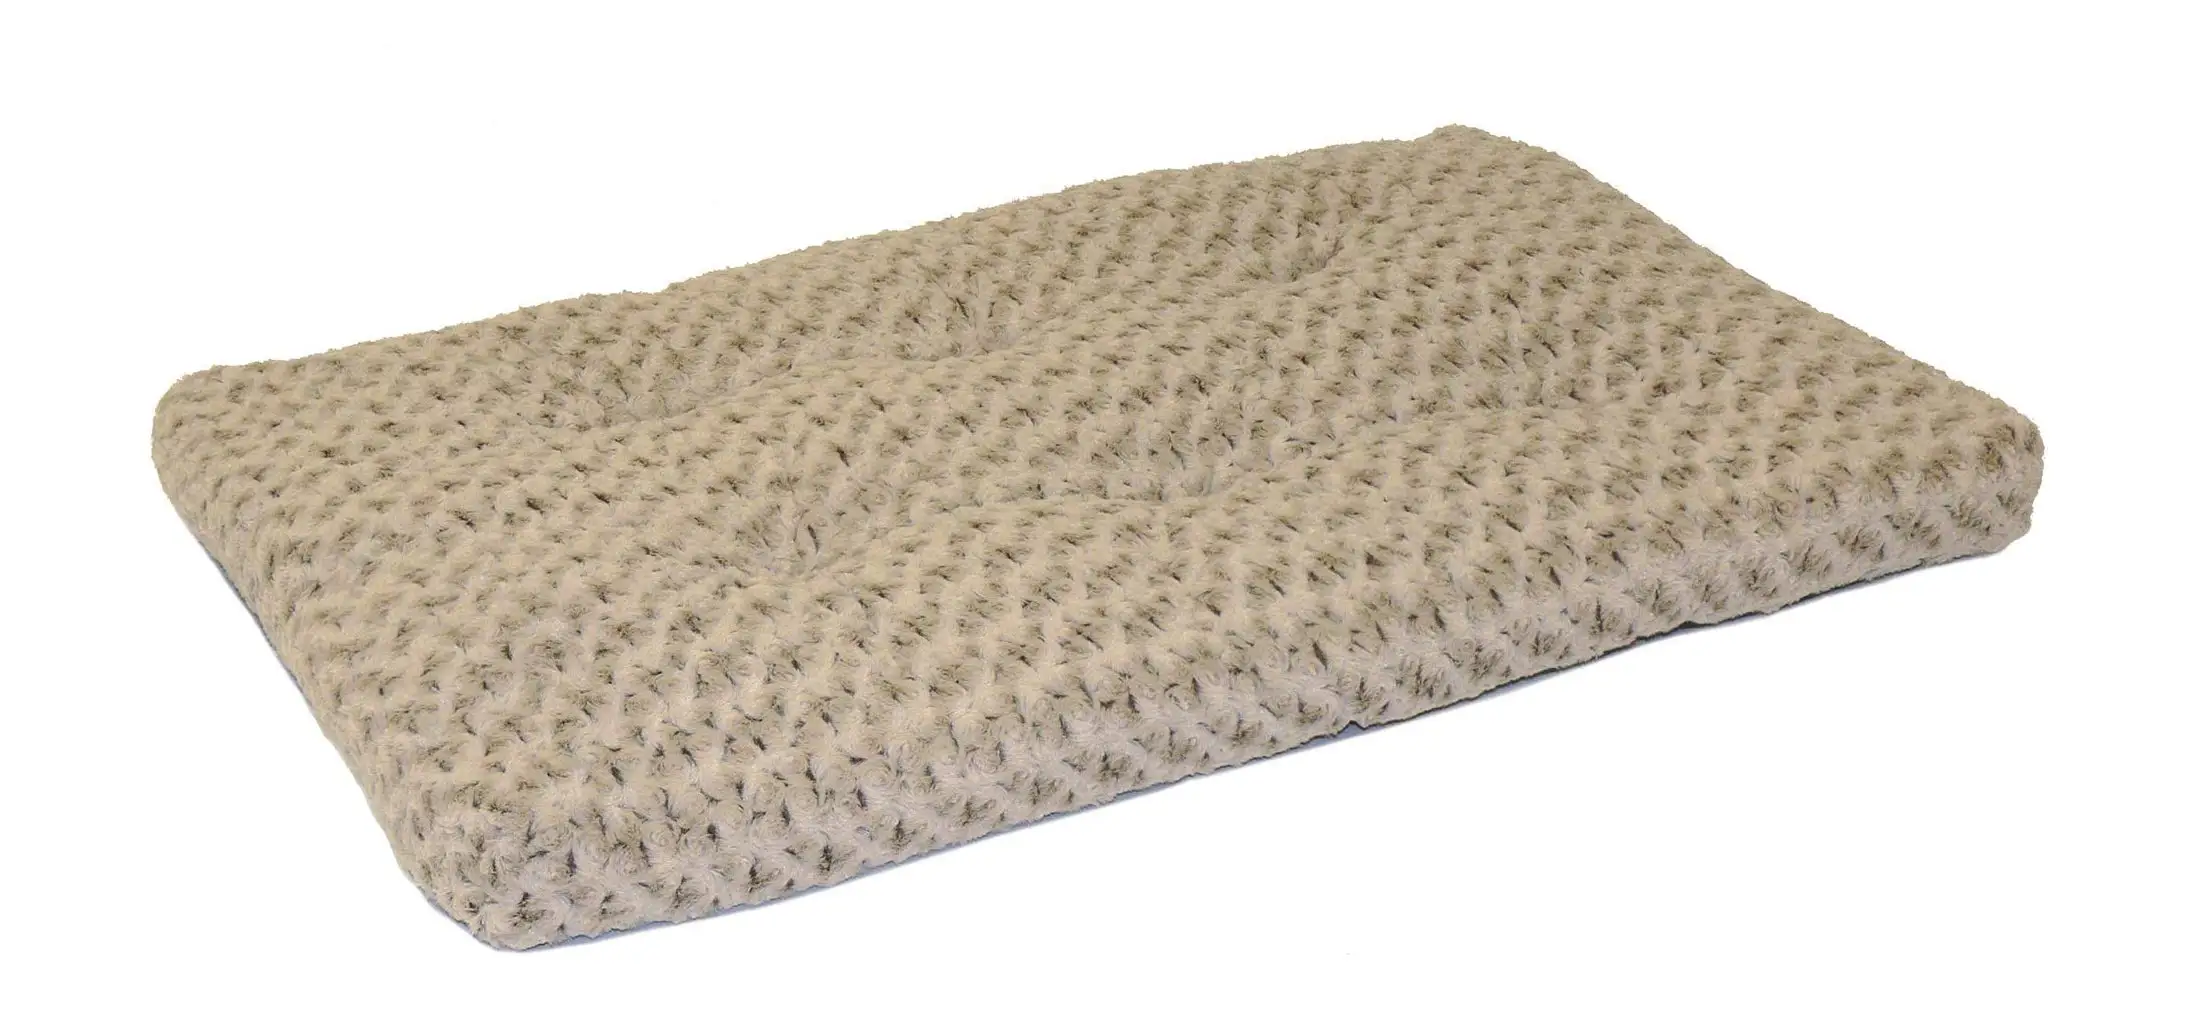 

Mocha Dog Beds | Super Plush Beds Ideal for Dog Crates | Machine Wash & Dryer Friendly, 46.0" L x 28.0" W x 3.0" Th